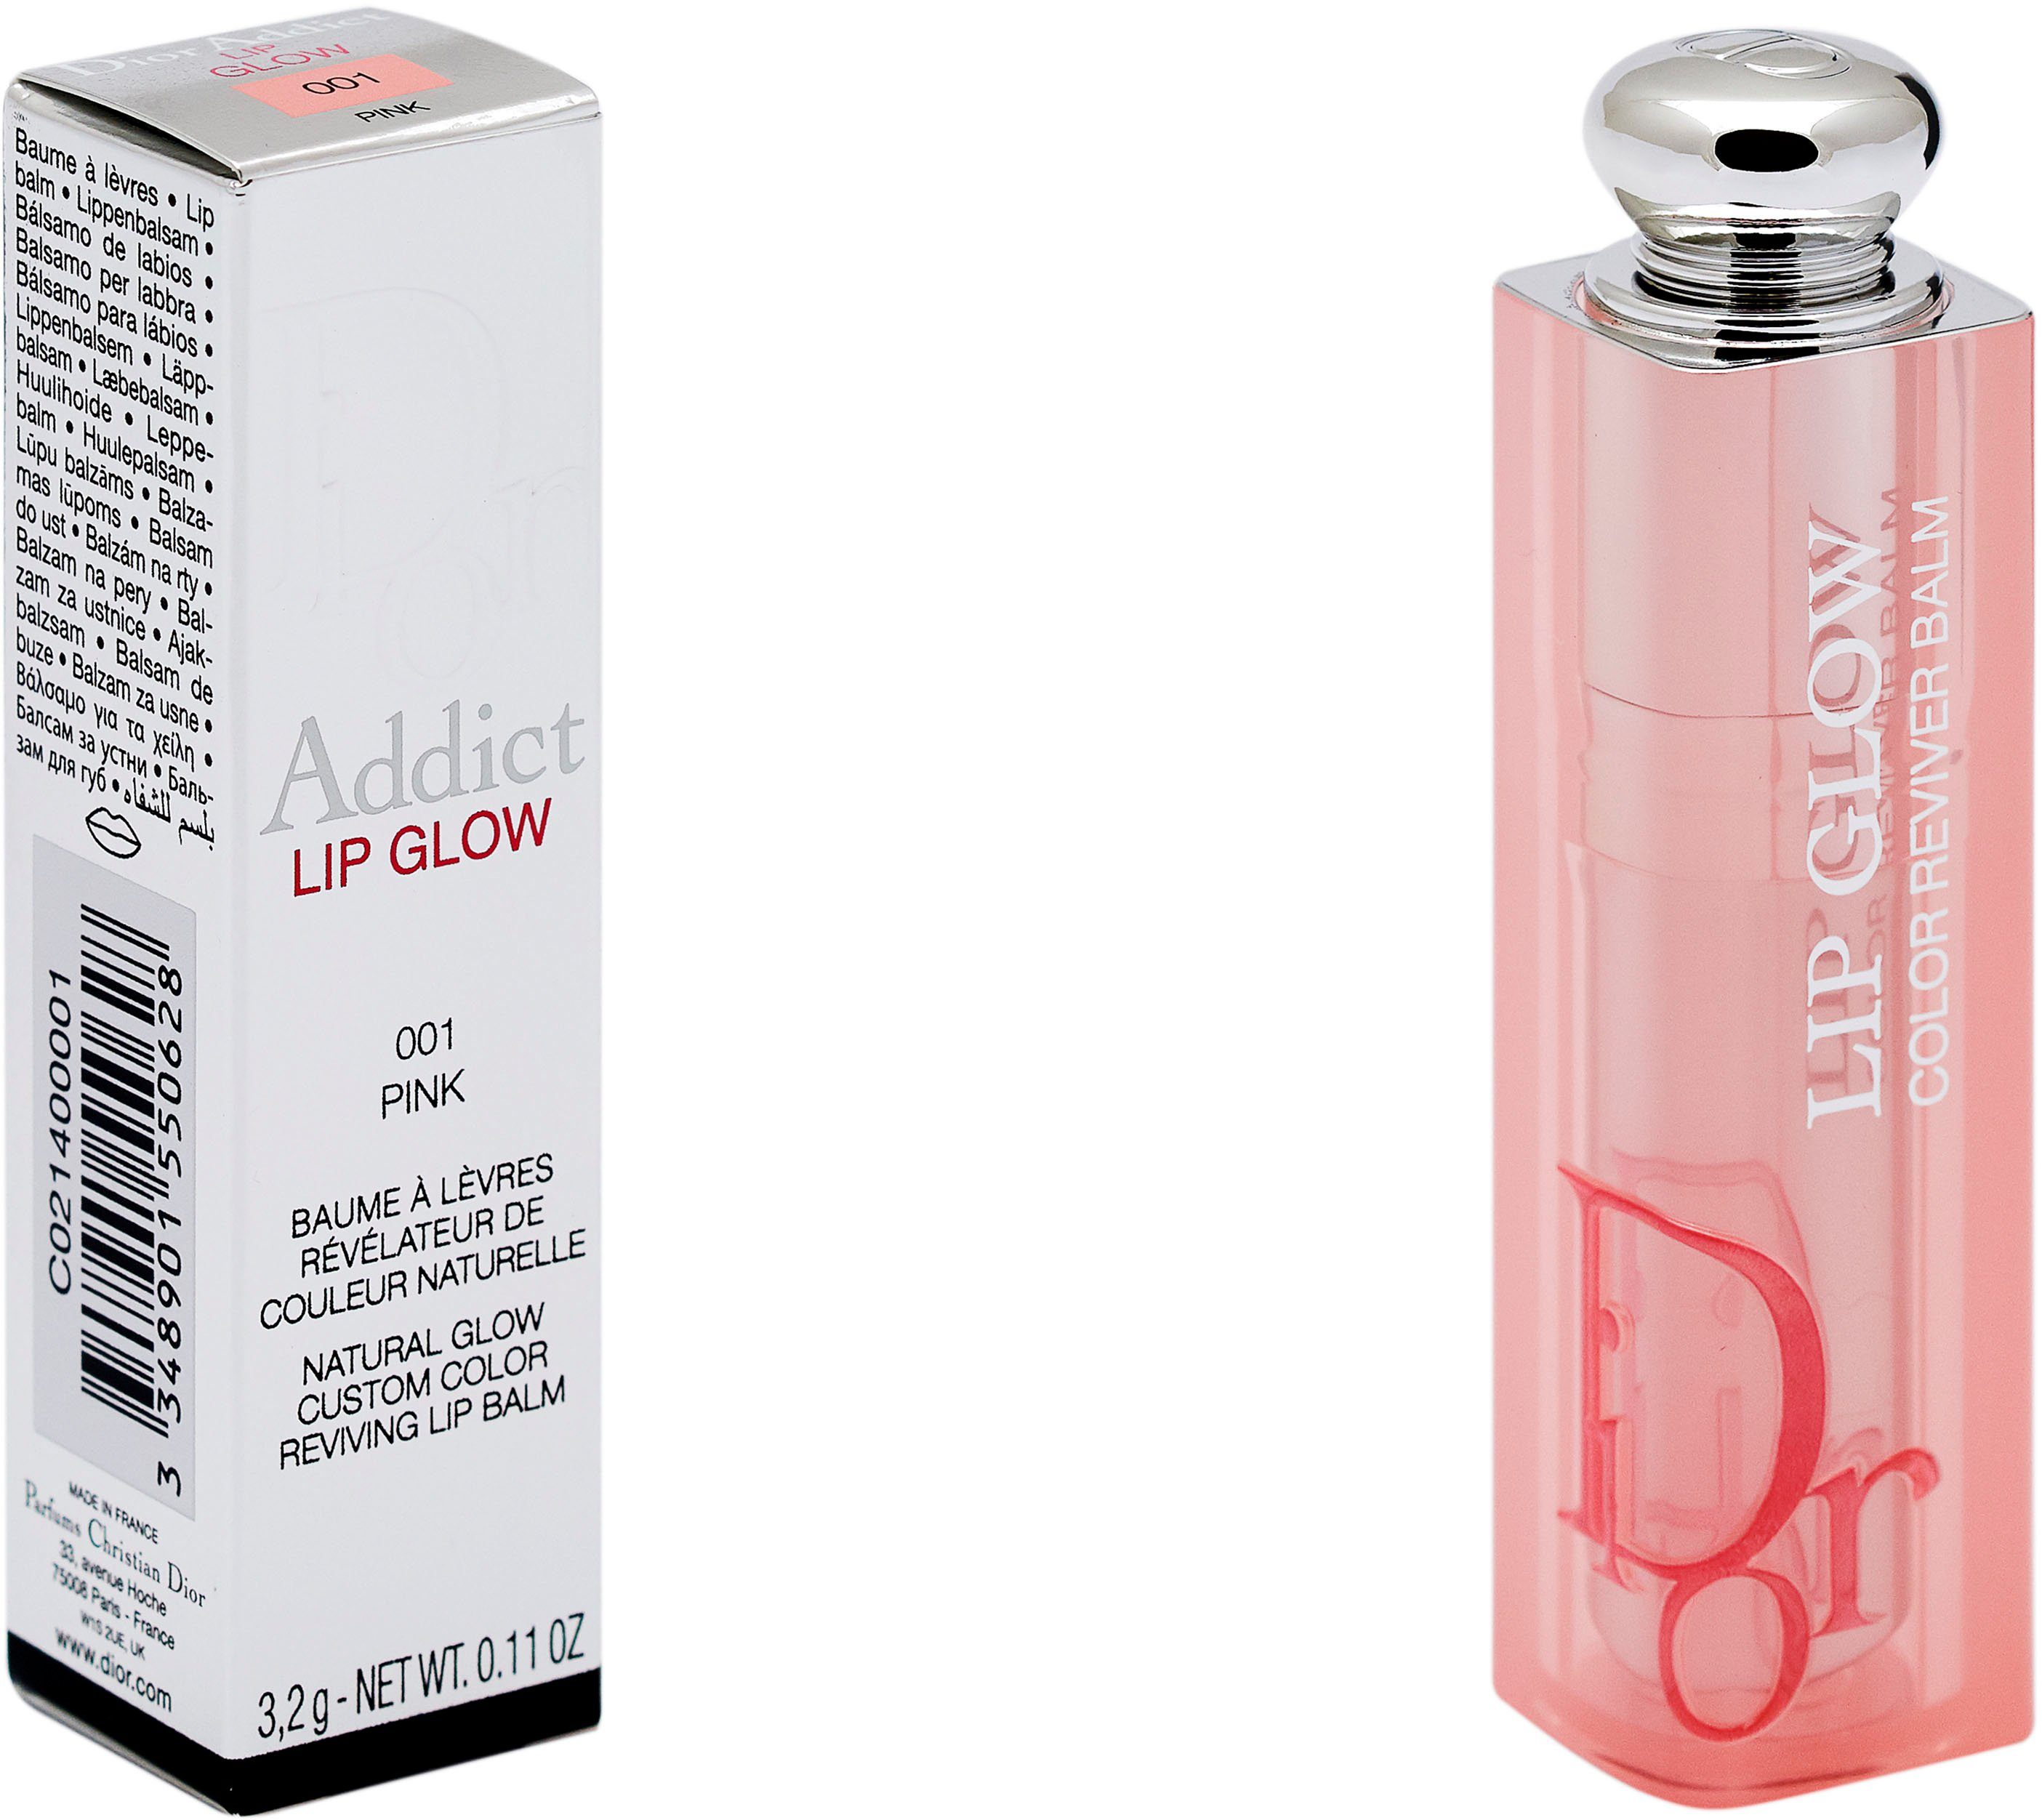 001 Pink Dior Lip Dior Lippenbalsam Addict Glow